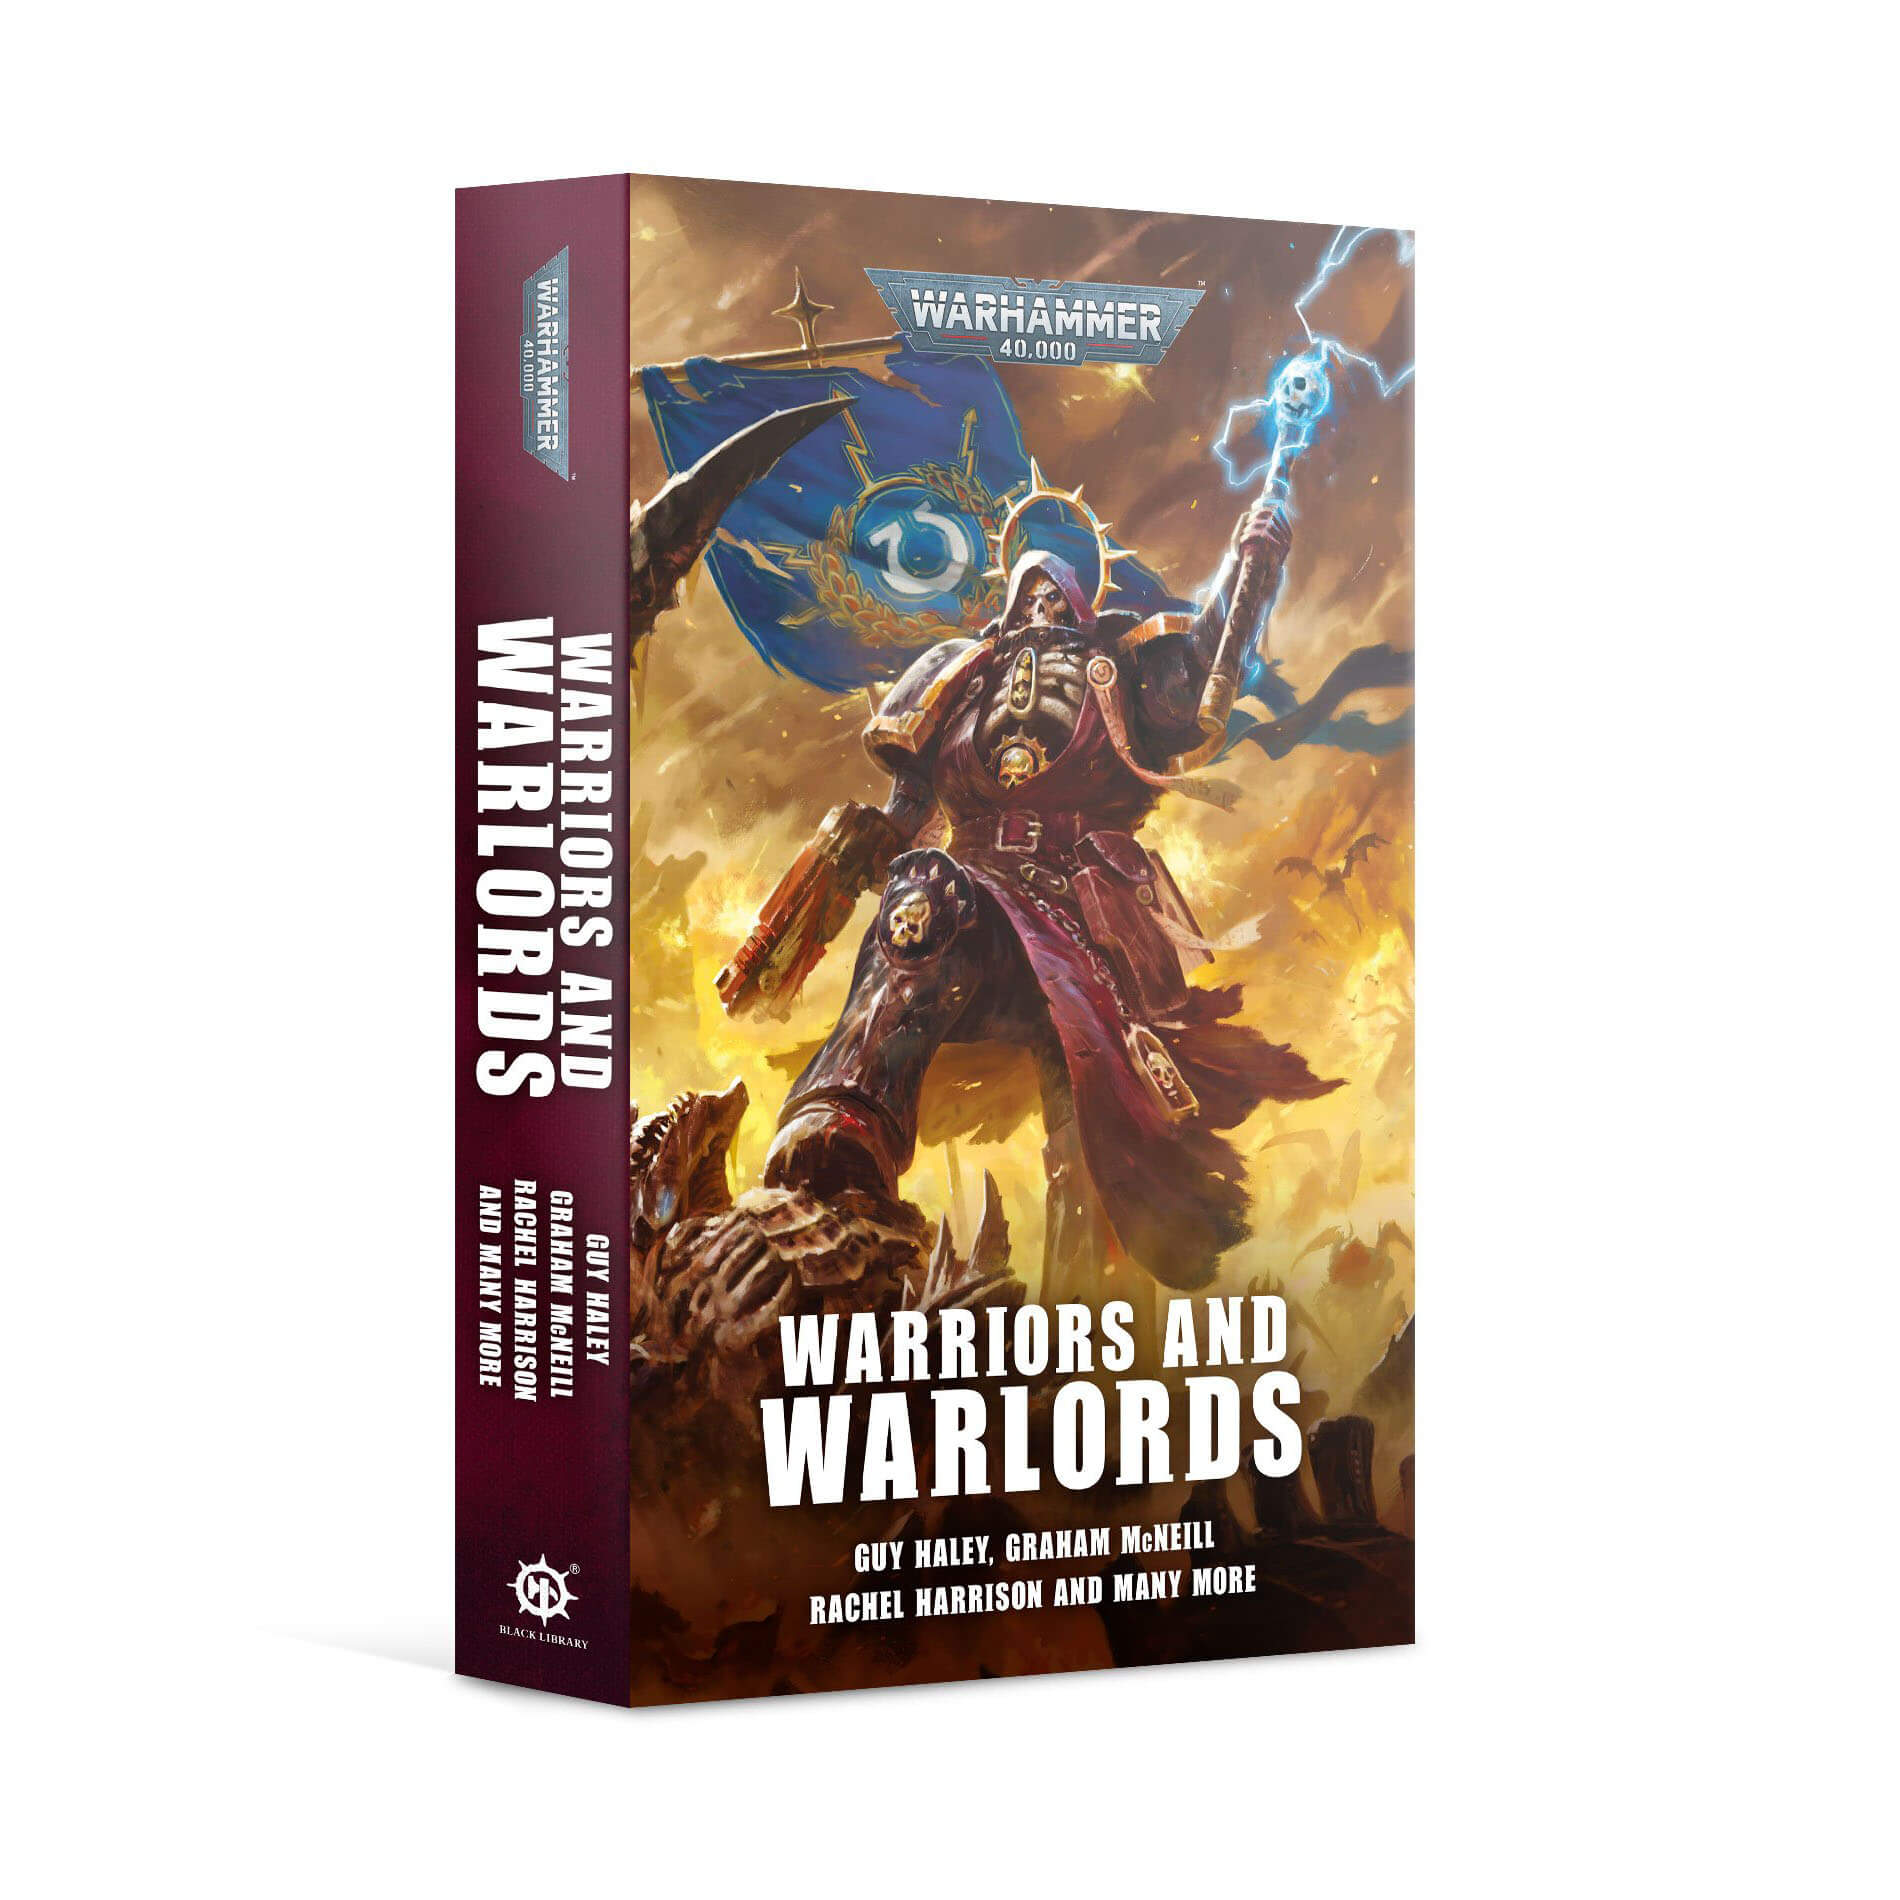 Warhammer 40k Warriors and Warlords